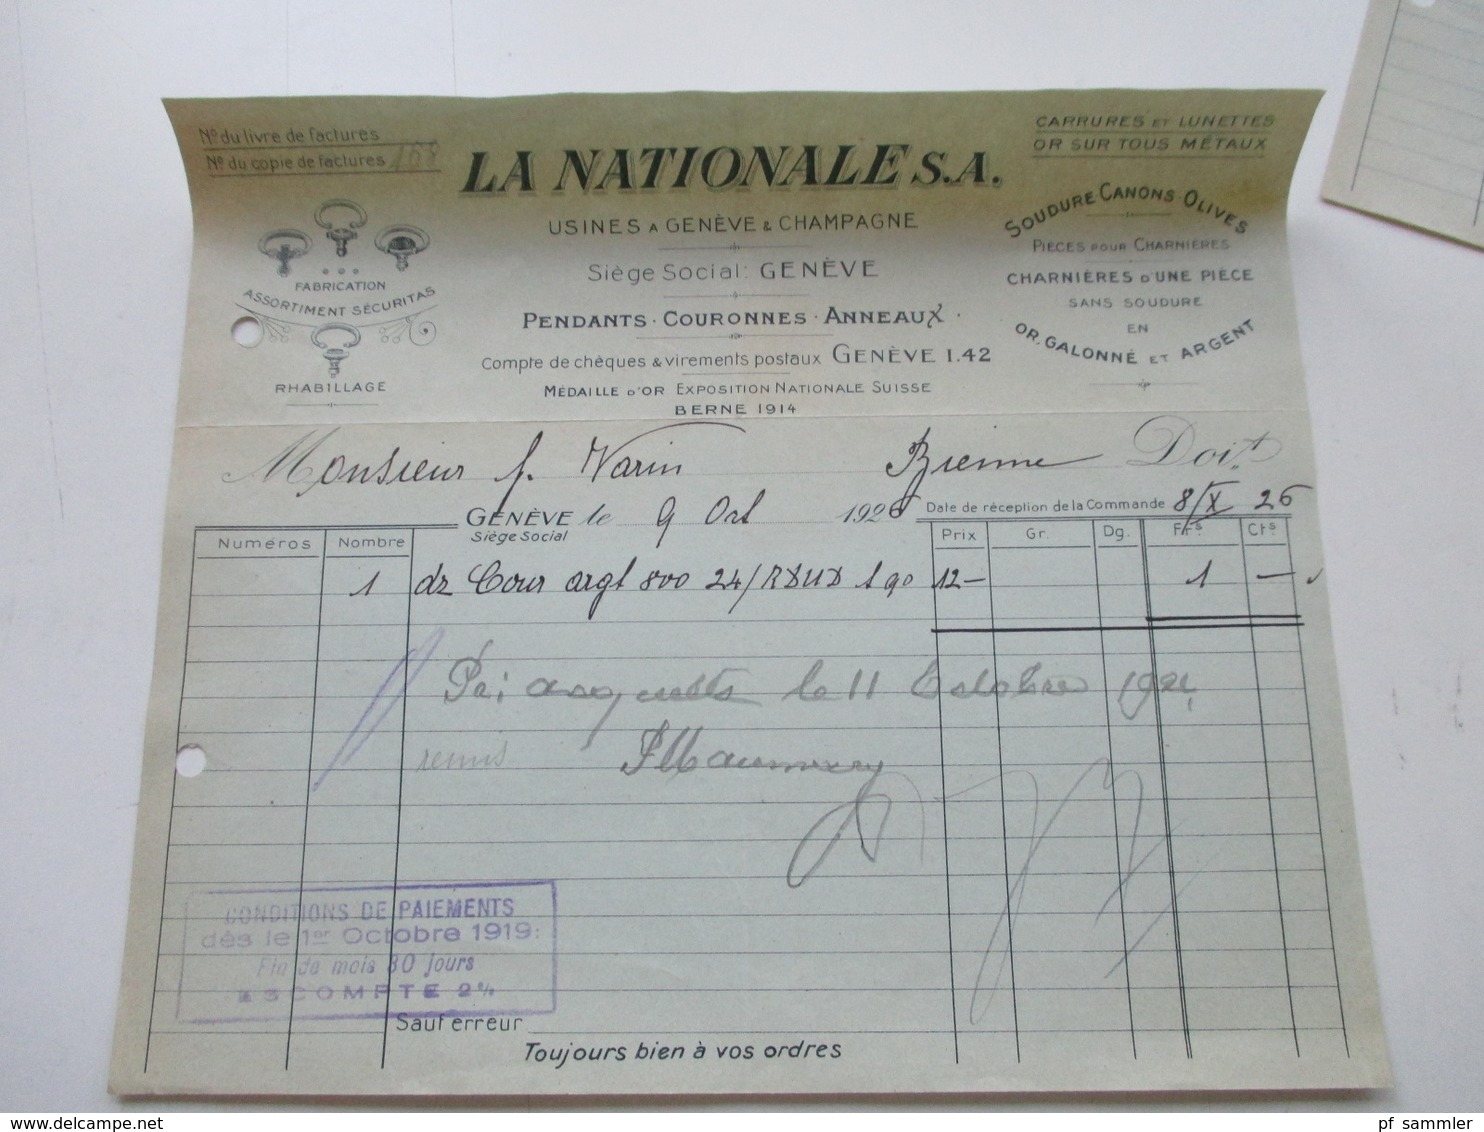 Schweiz 1924 / 26 4 Rechnungen La Nationale S.A. Usines A Geneve & Champagne Fabrication Assortiment Securitas - Svizzera